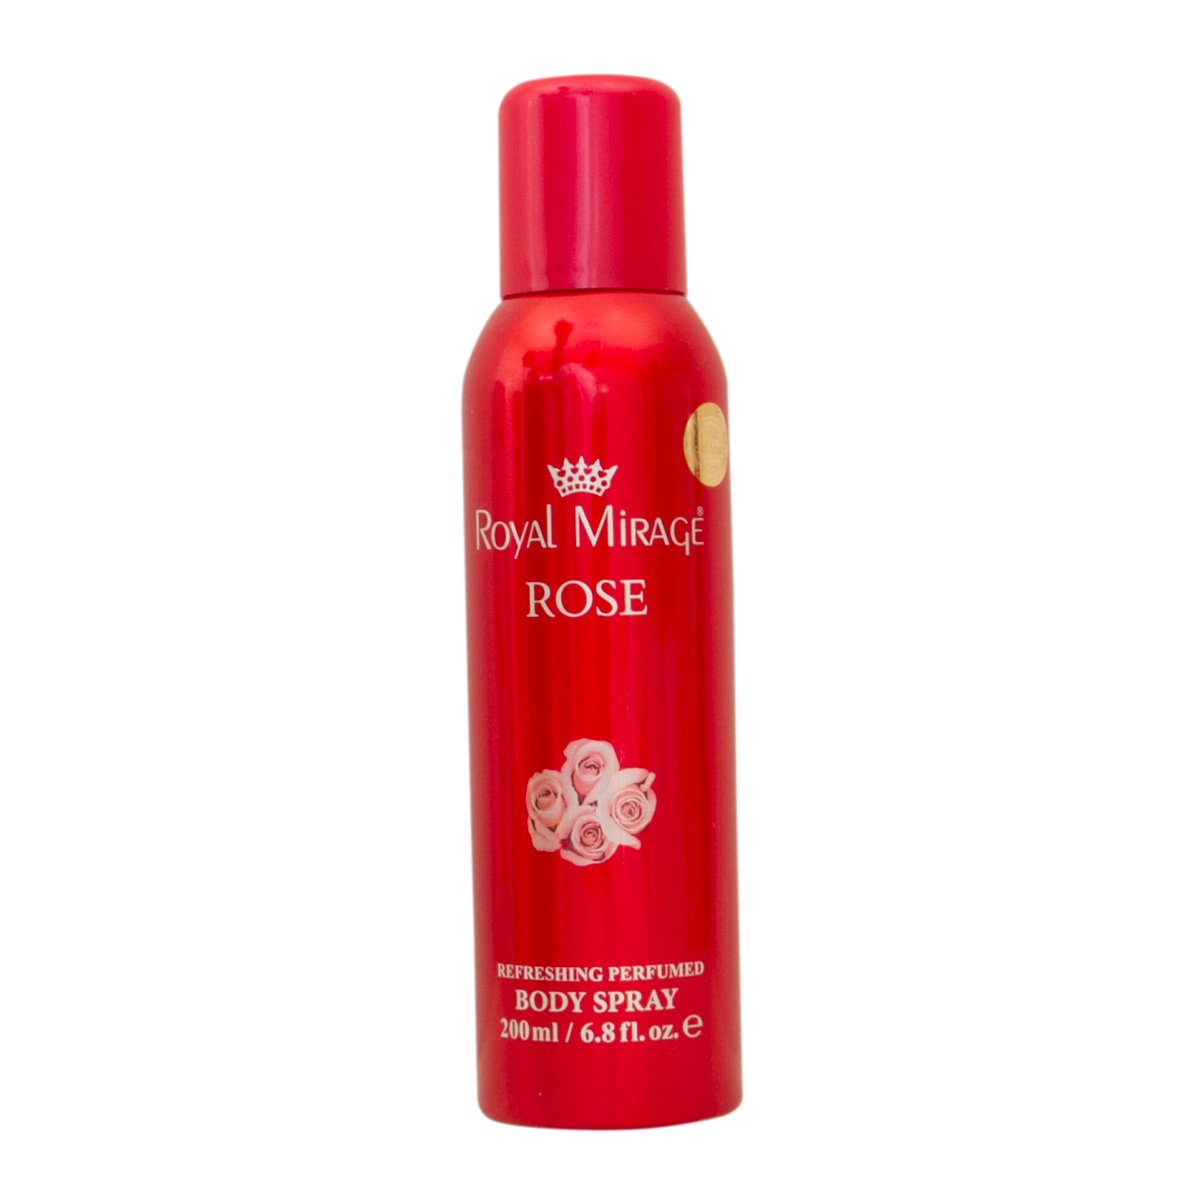 Royal Mirage Body Spray Rose 200ml